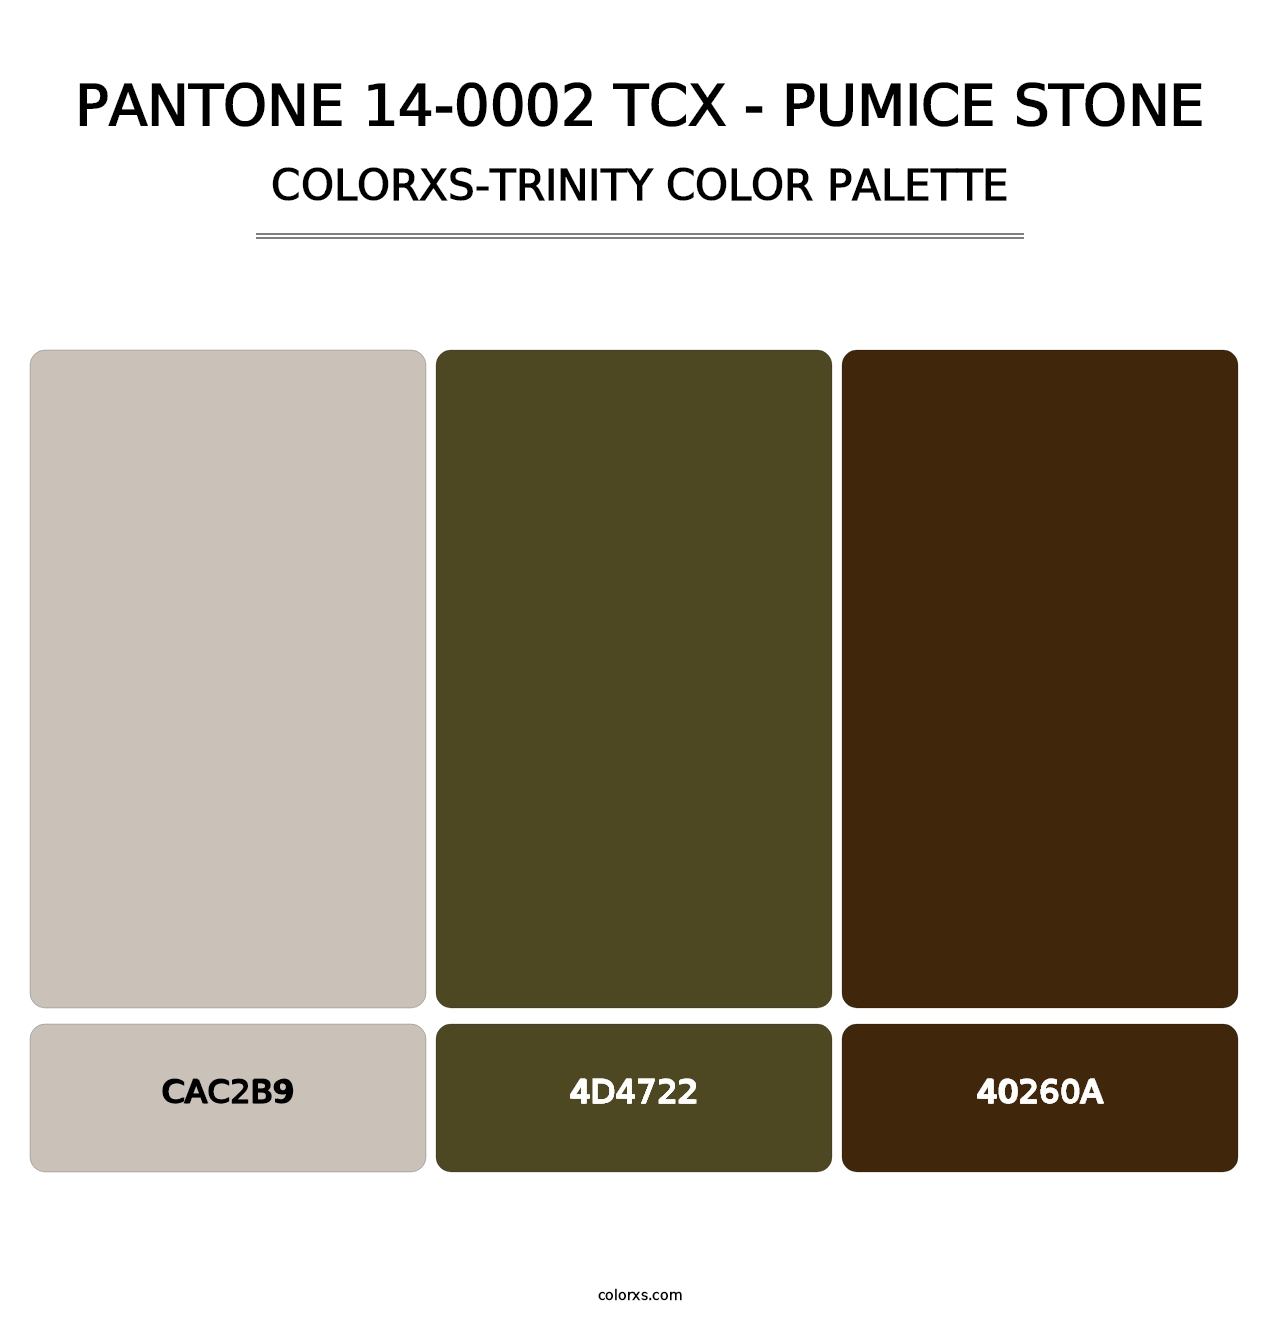 PANTONE 14-0002 TCX - Pumice Stone - Colorxs Trinity Palette